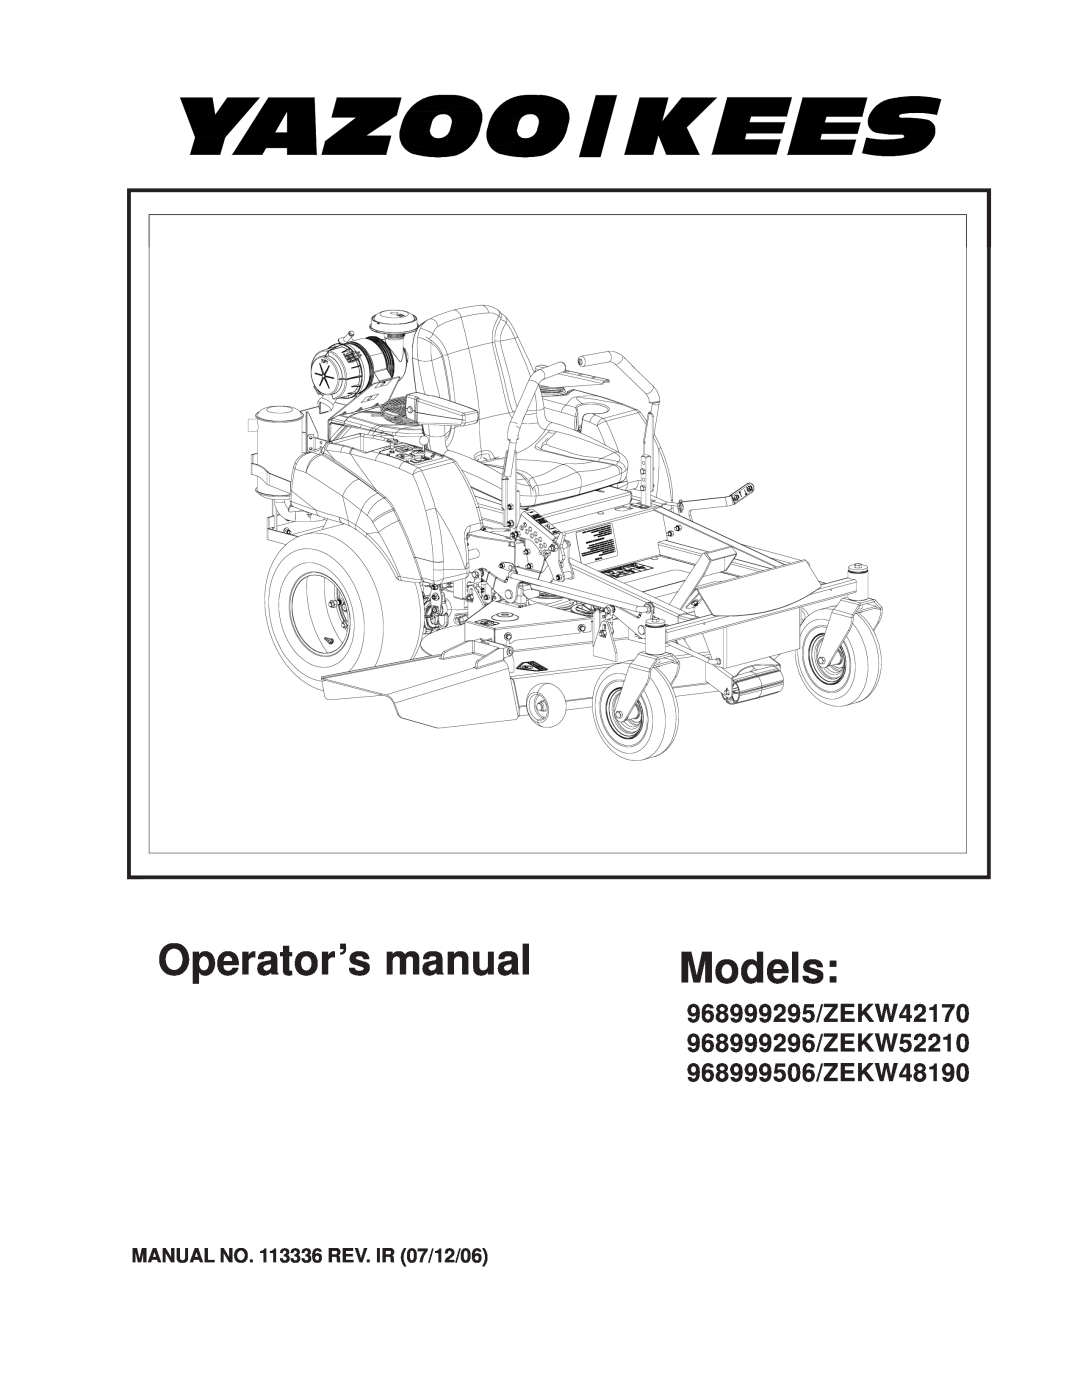 Yazoo/Kees manual Operator’s manual, Models, 968999295/ZEKW42170, 968999296/ZEKW52210, 968999506/ZEKW48190 